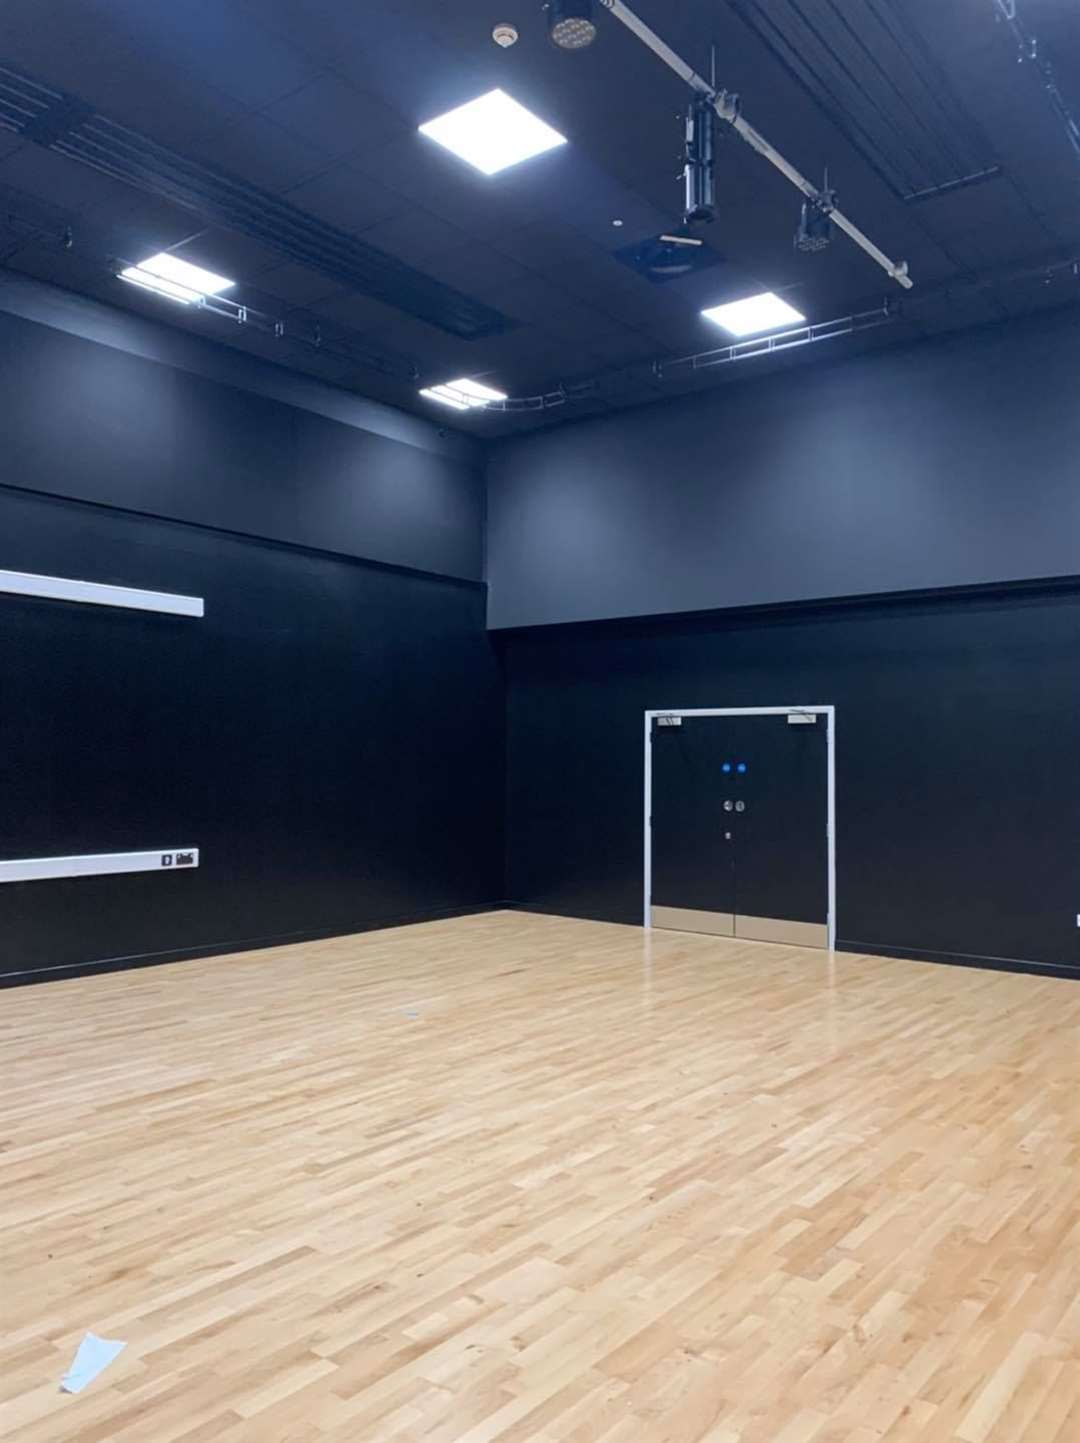 Dance studios